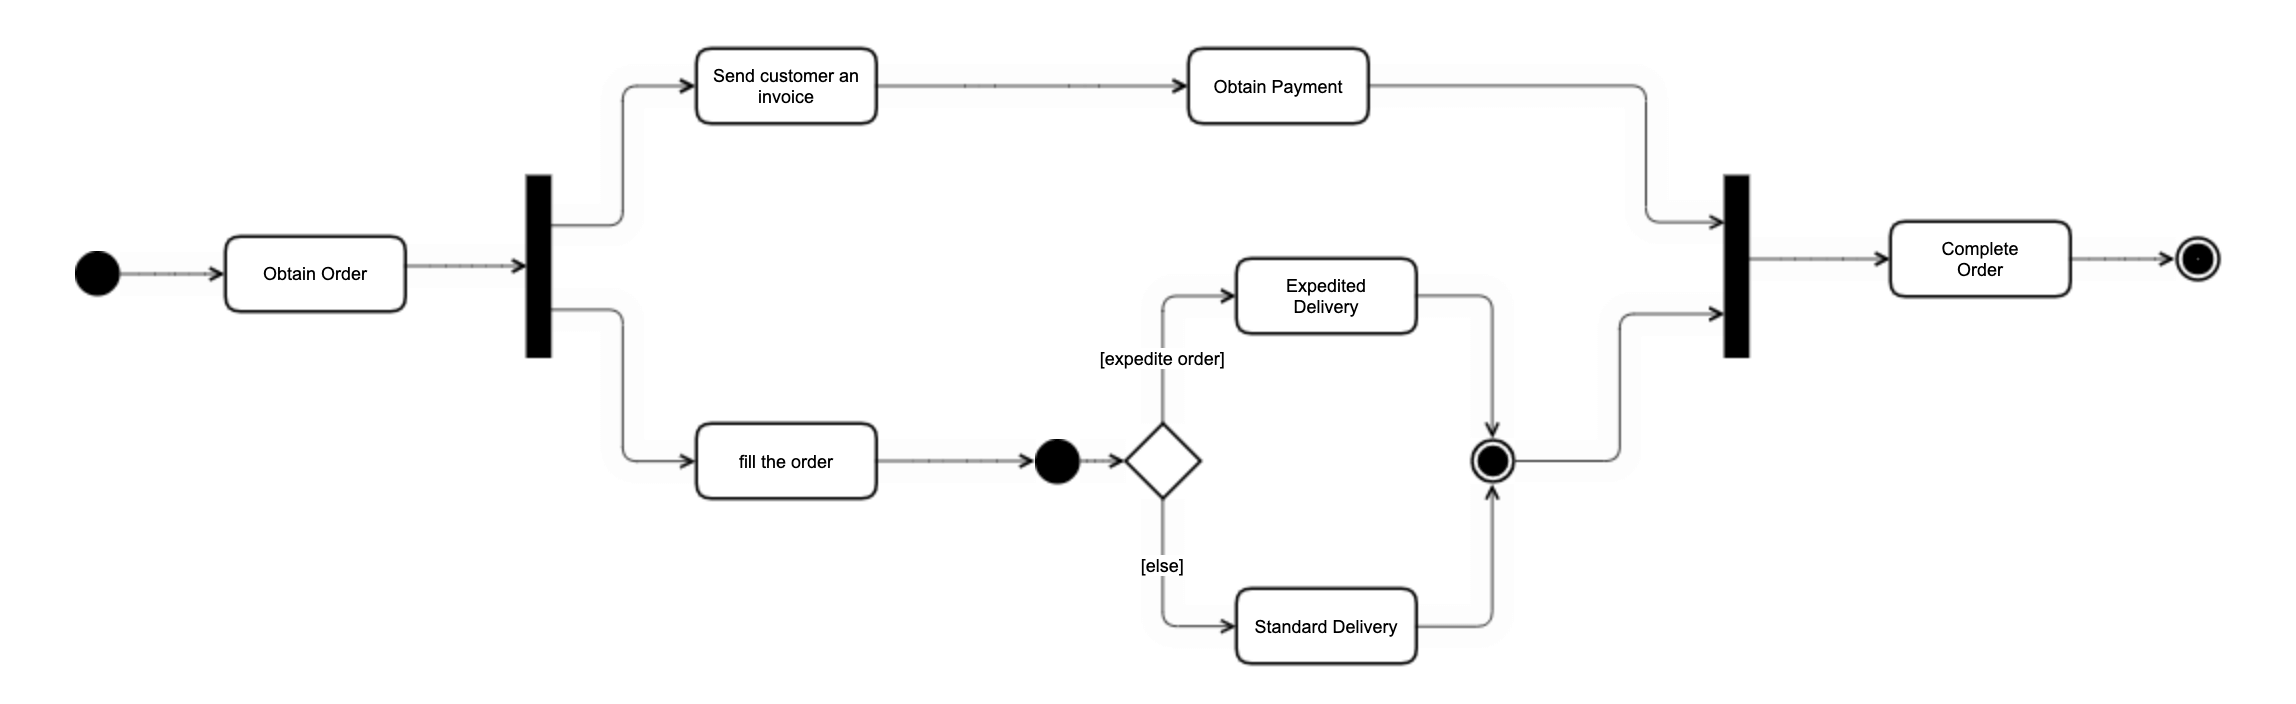 synchronization bars in activity diagrams